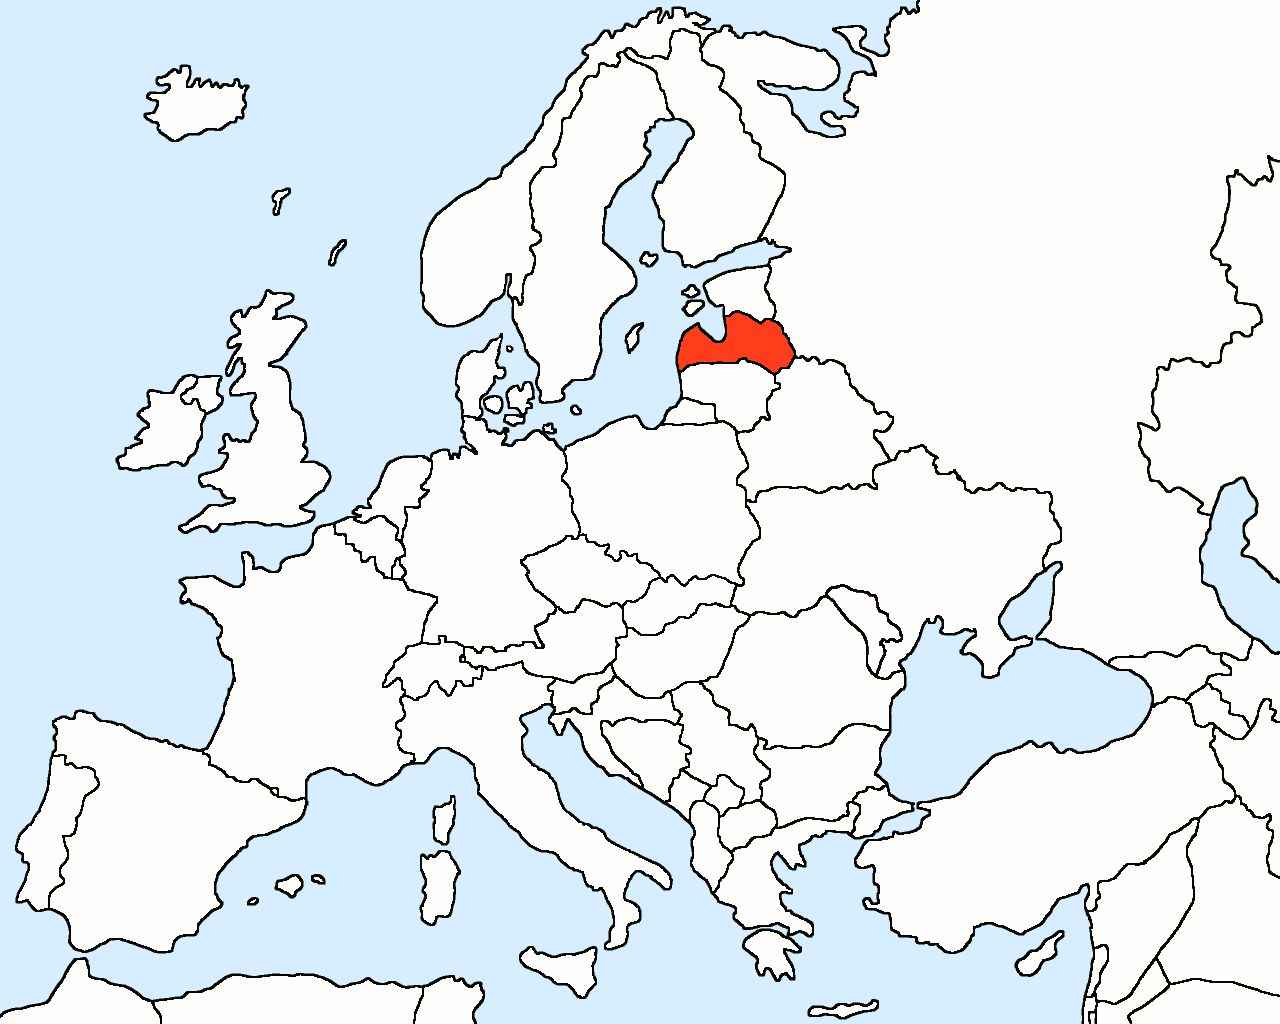 Latvia ing peta Eropah